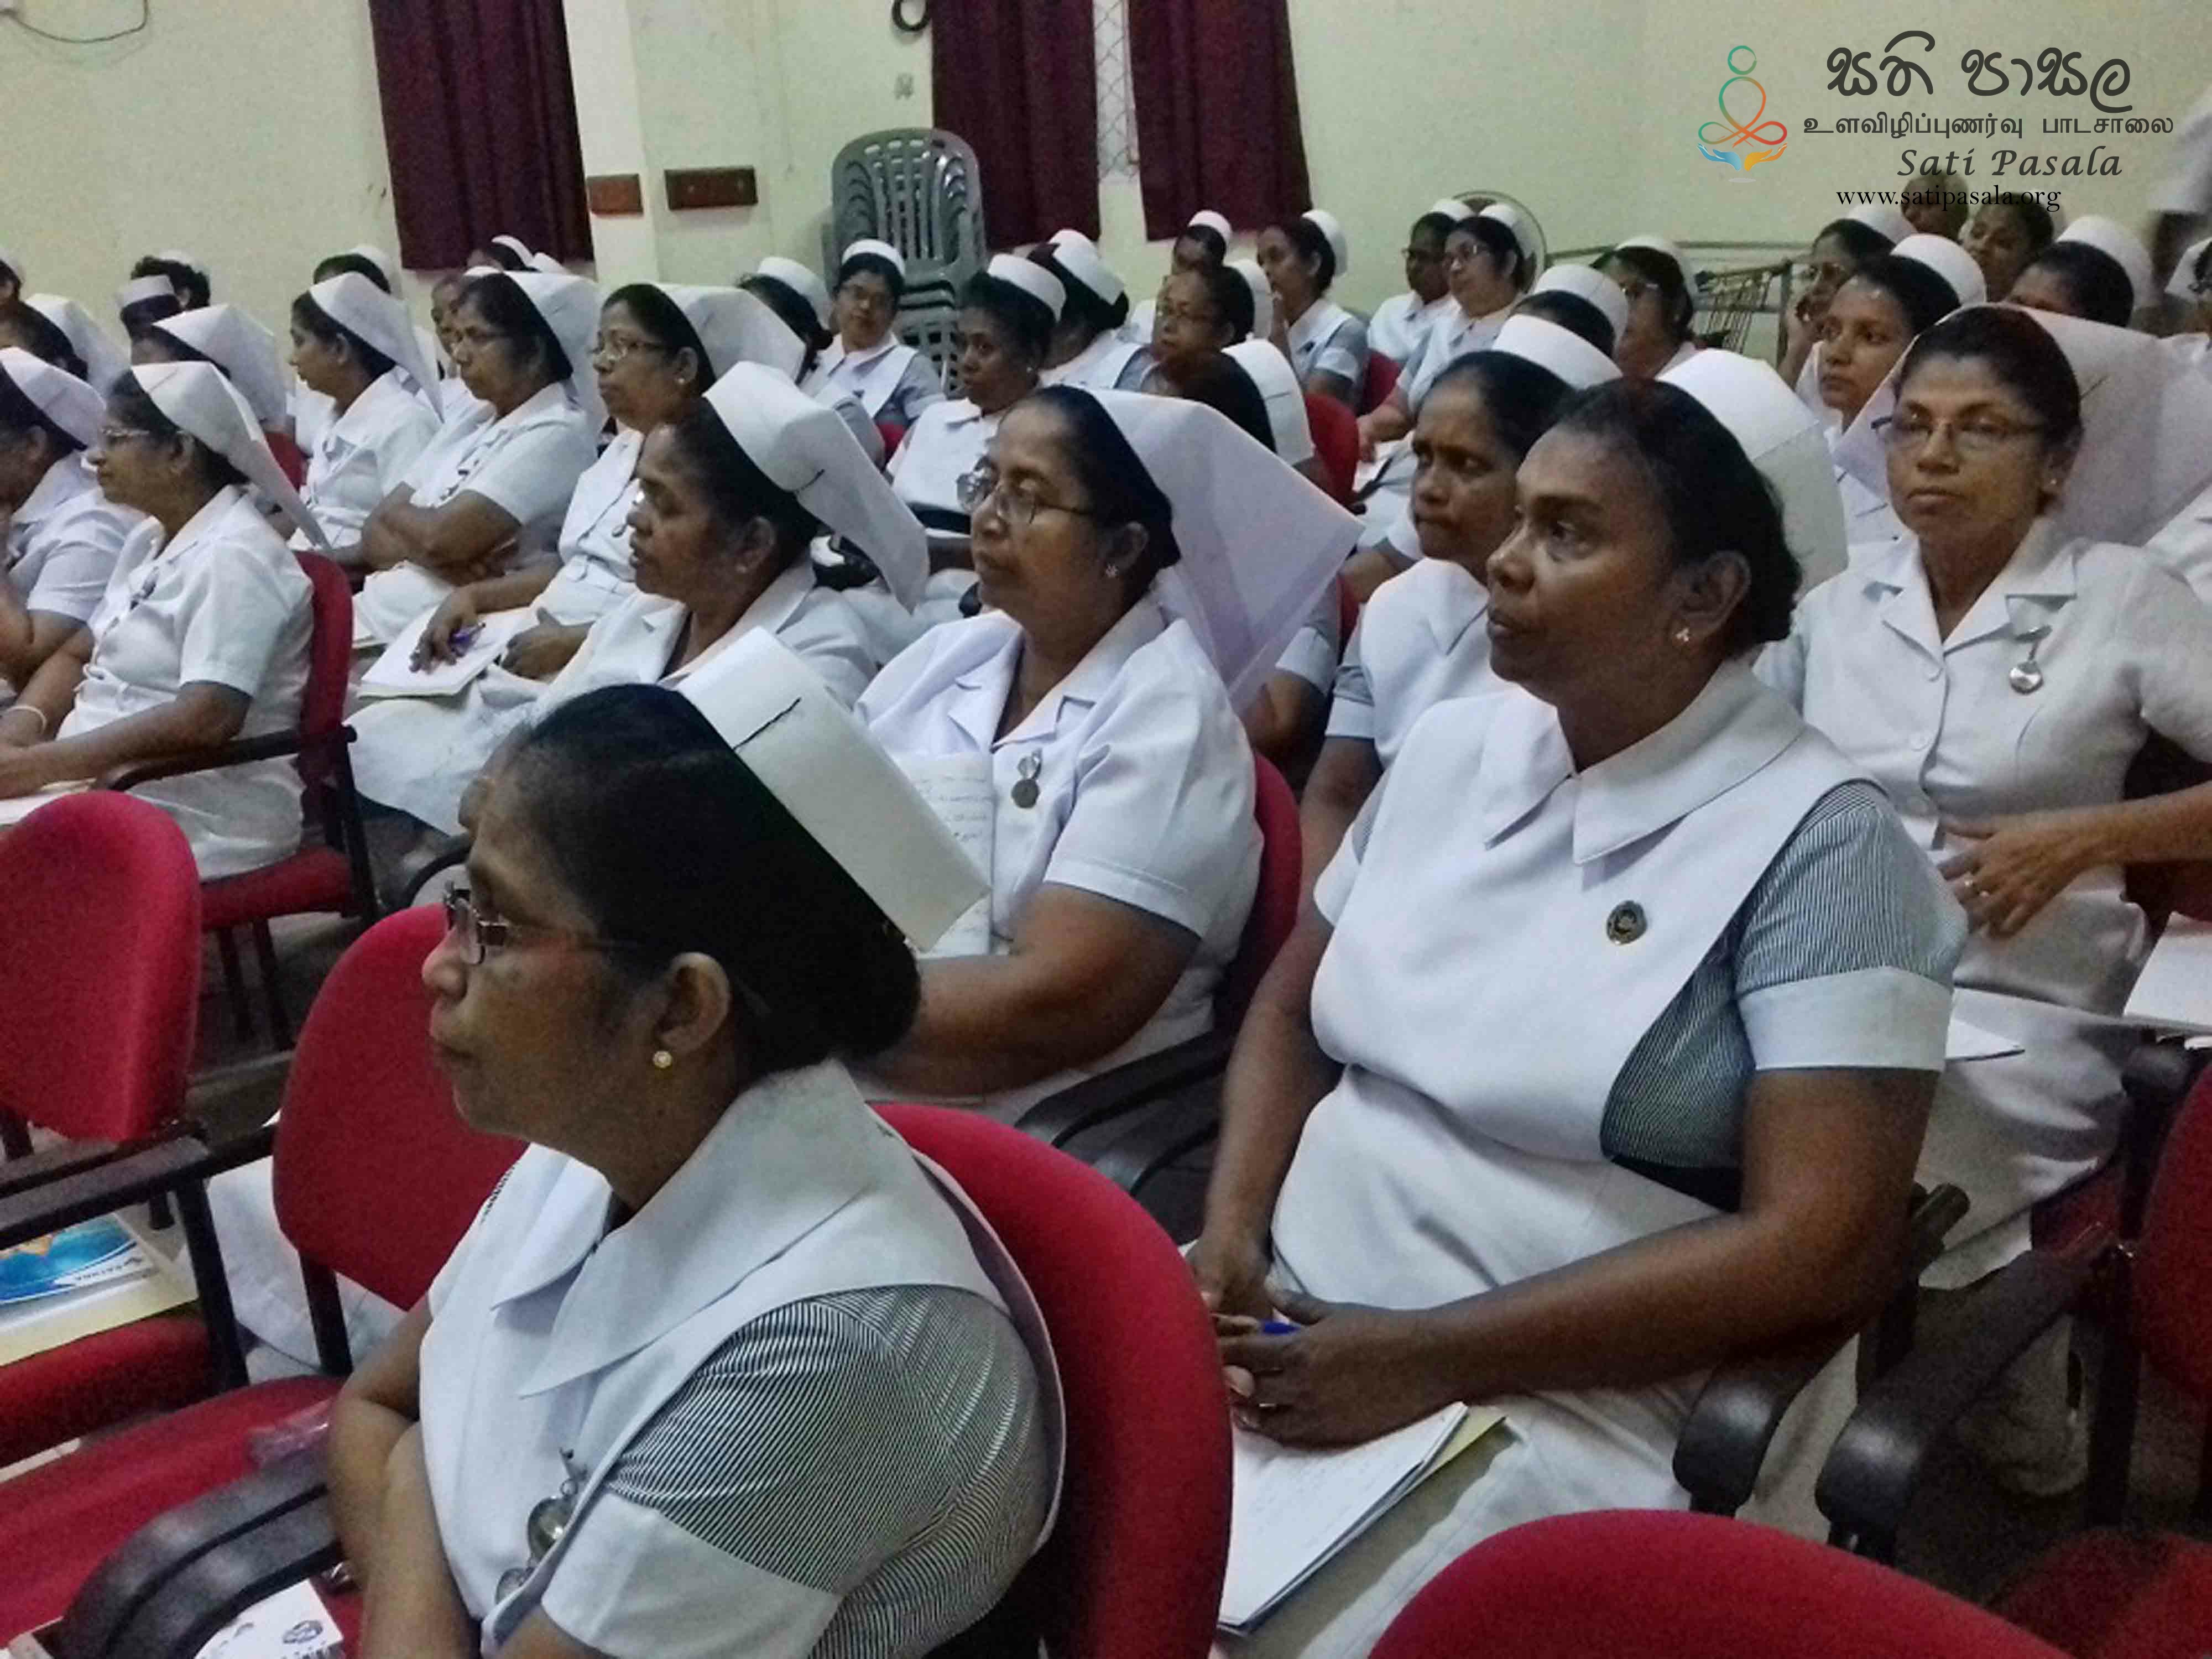 Sati Pasala Mindfulness Programme at Ragama Hospital